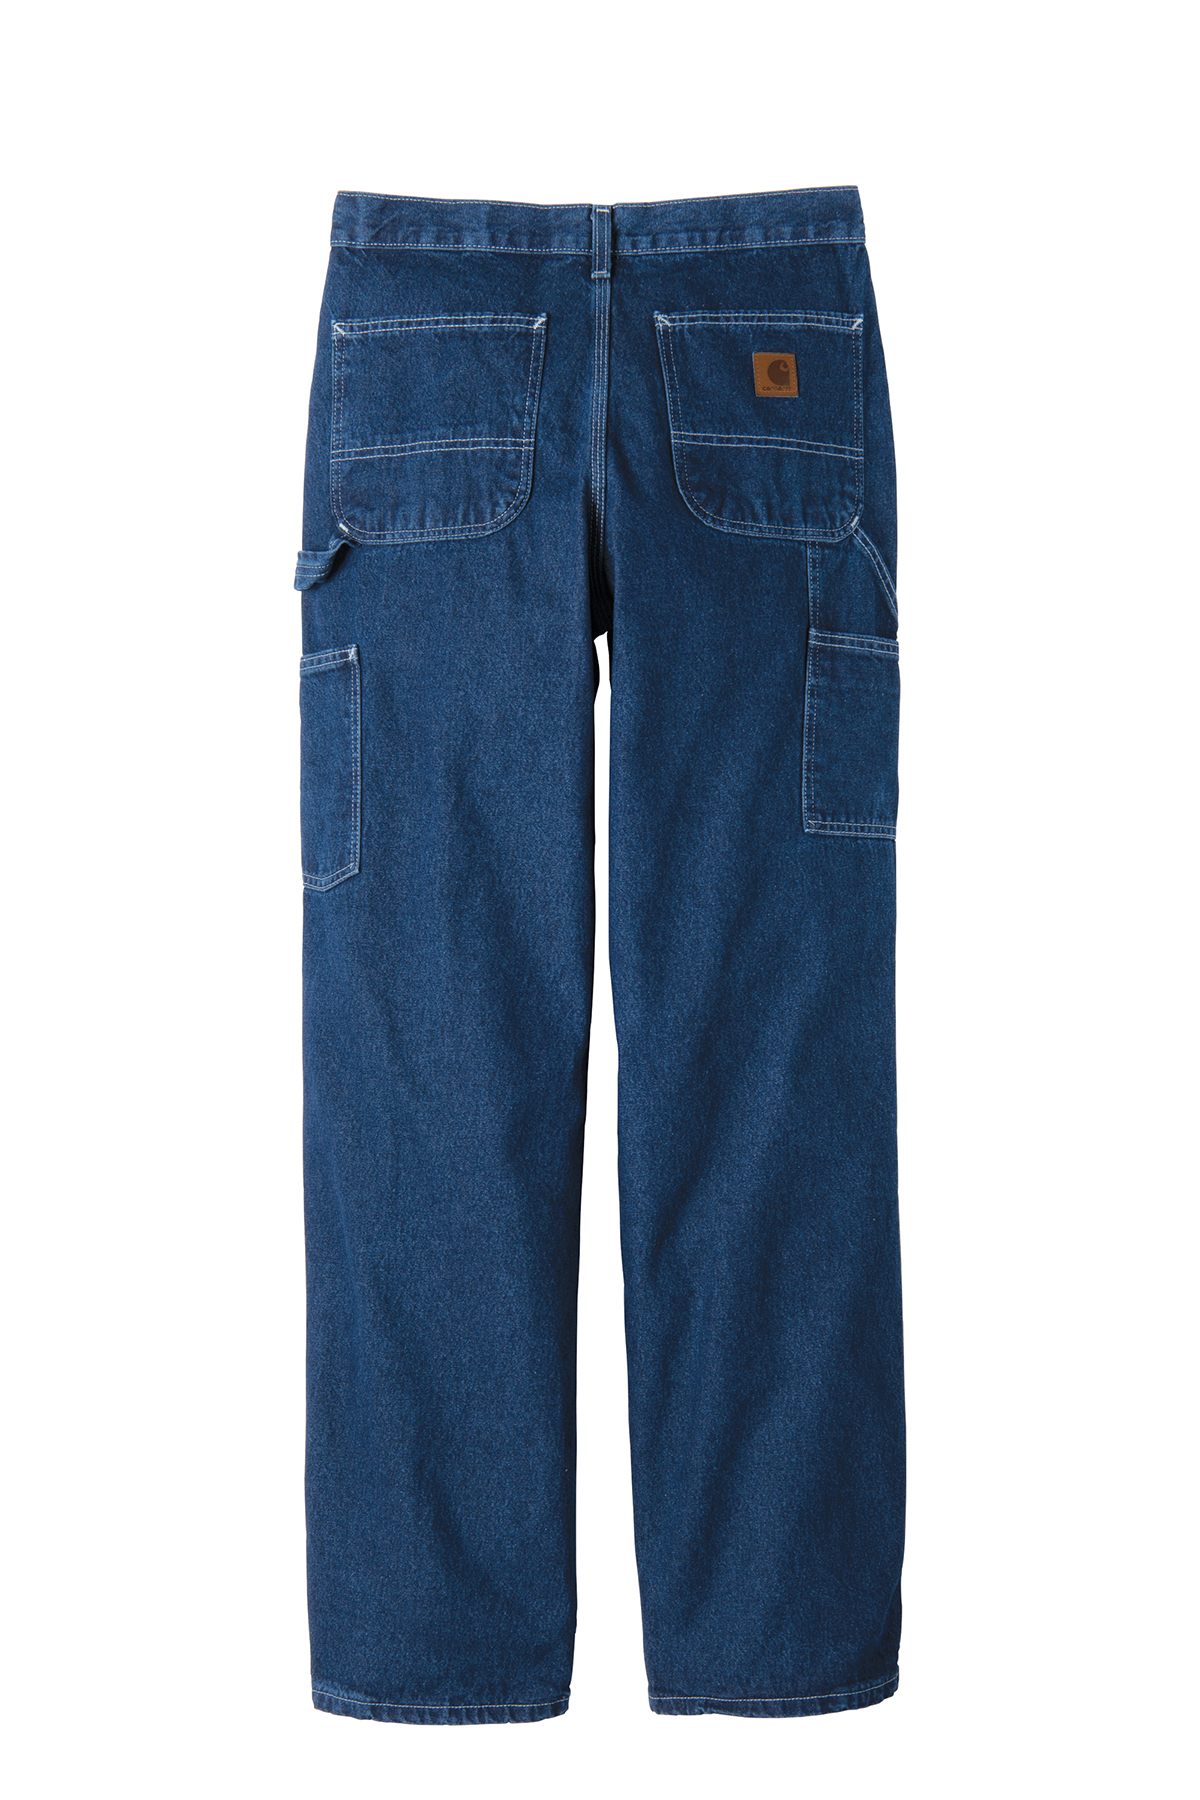 carhartt work dungaree jeans